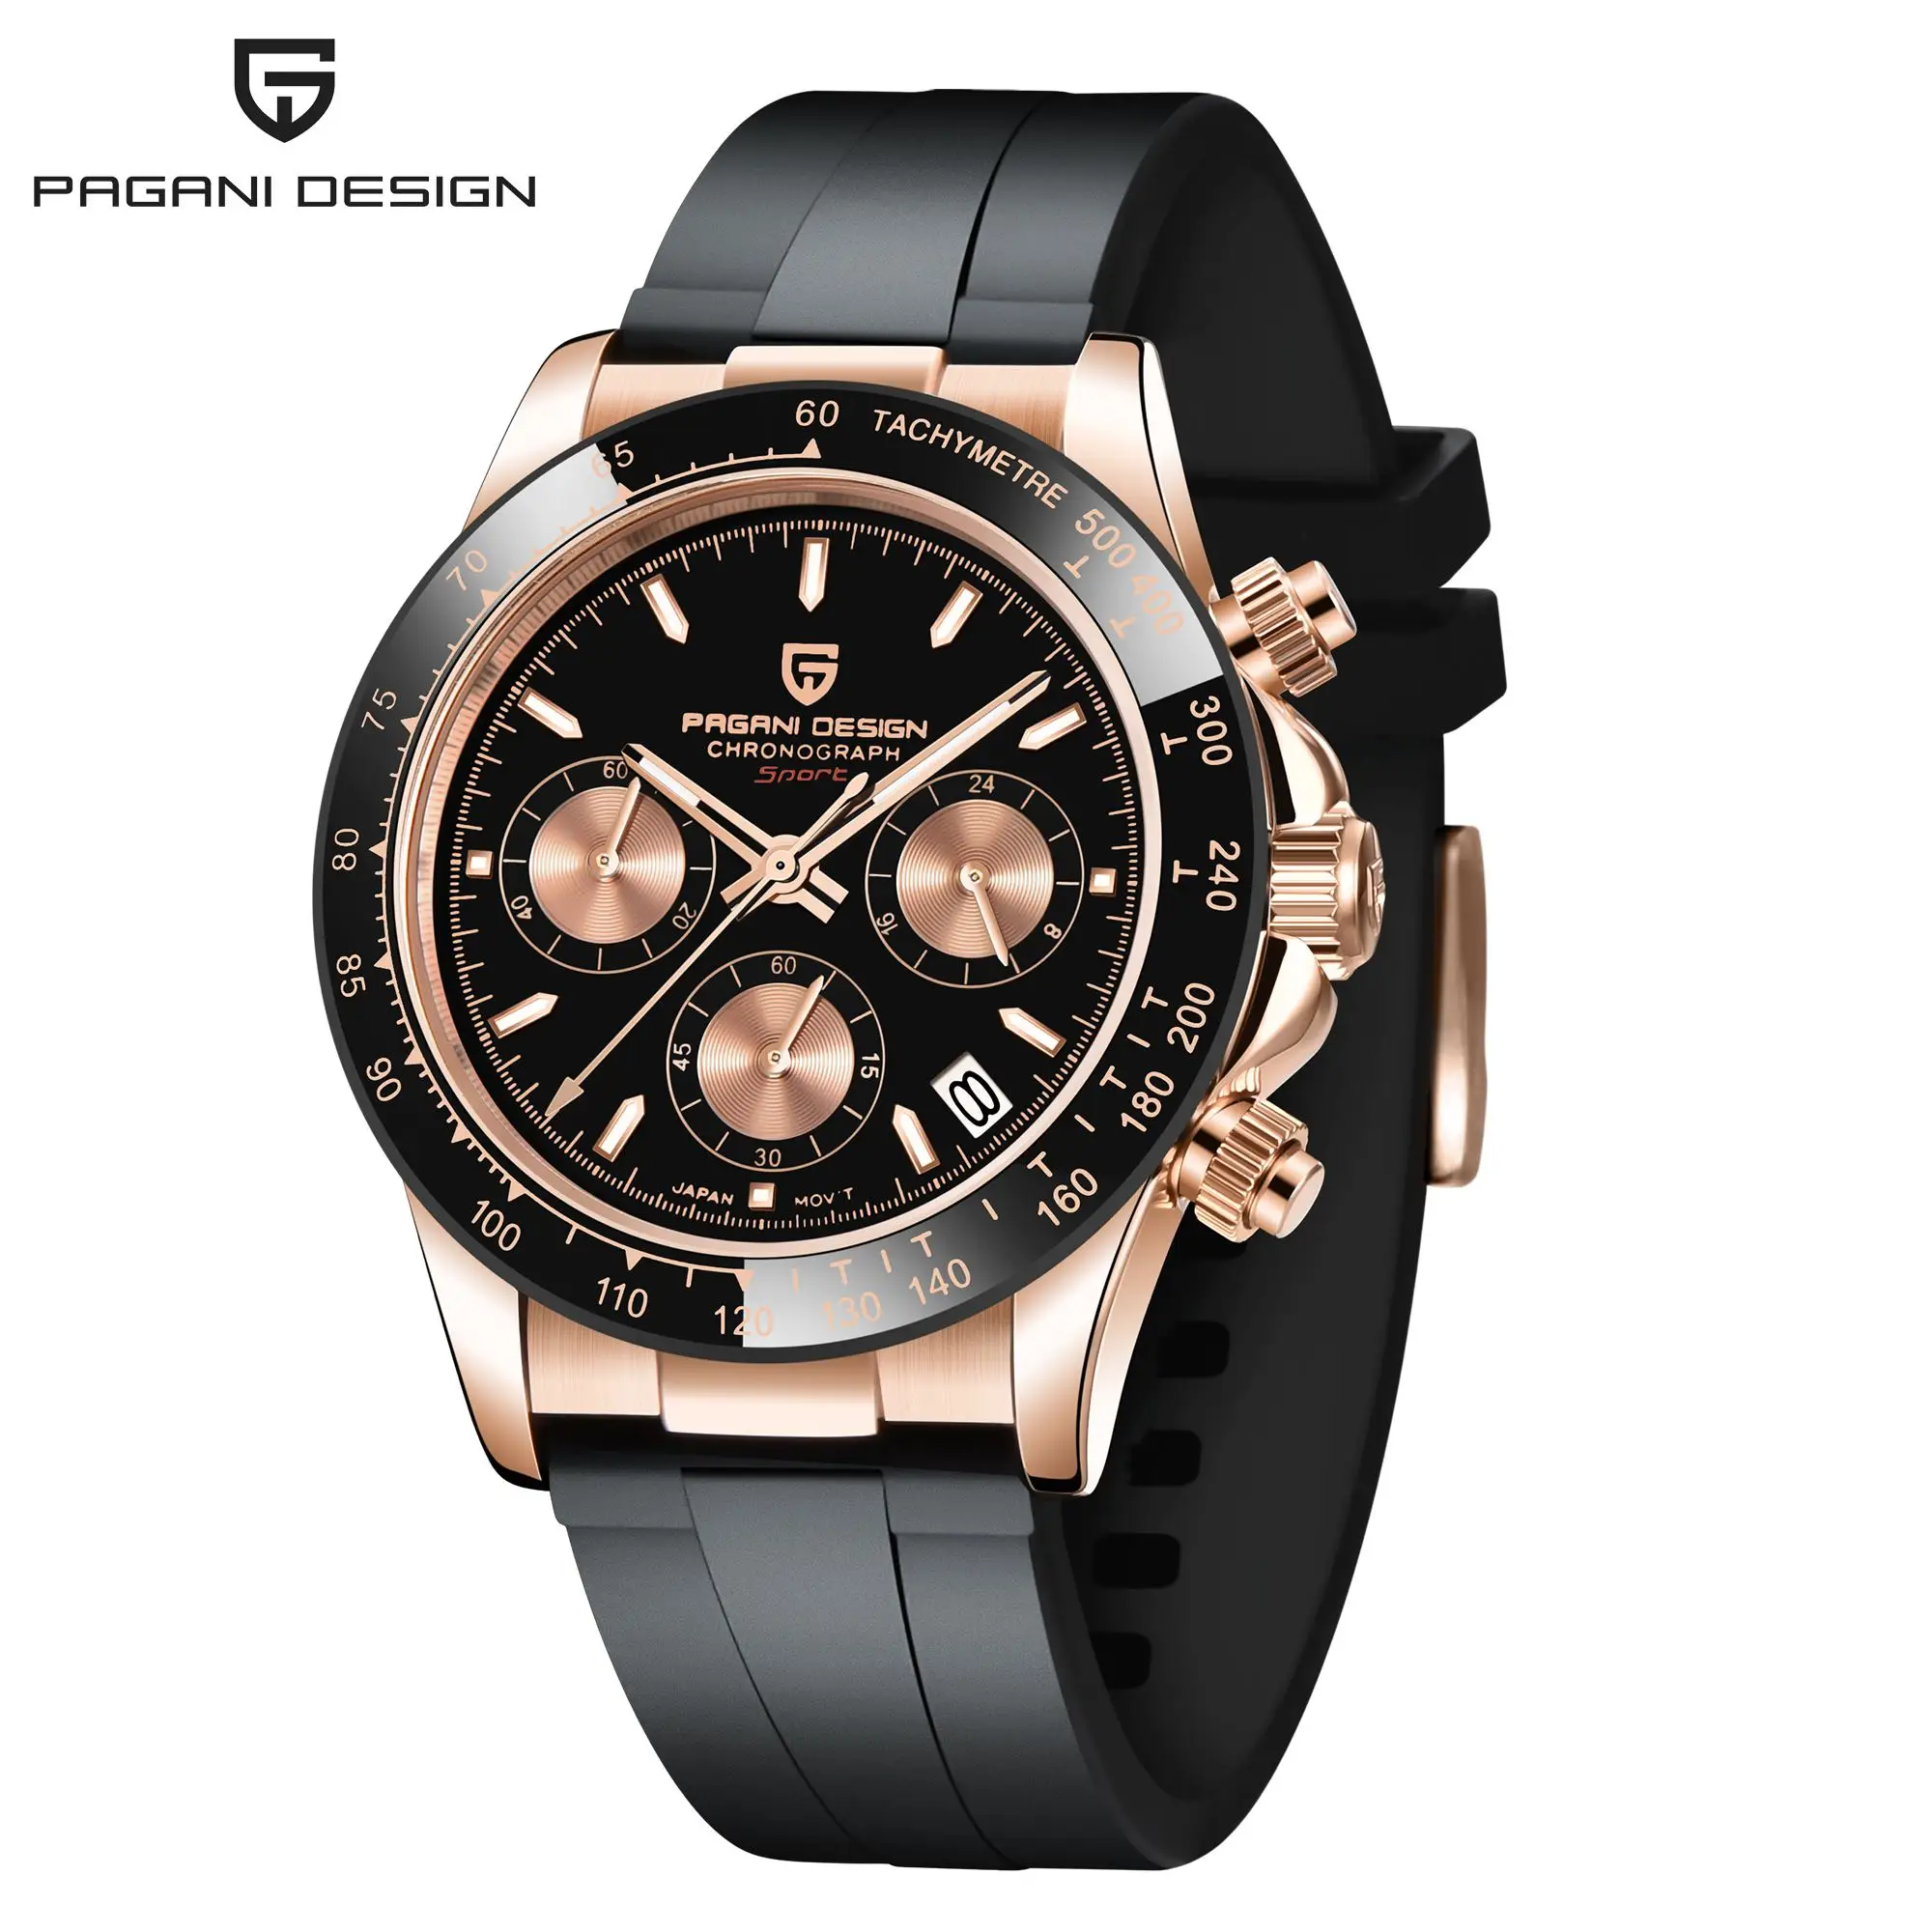 

reloj pagani design watch 1664 OEM luxury men quartz wrist chronograph japan movement stainless steel watch with rubber strap